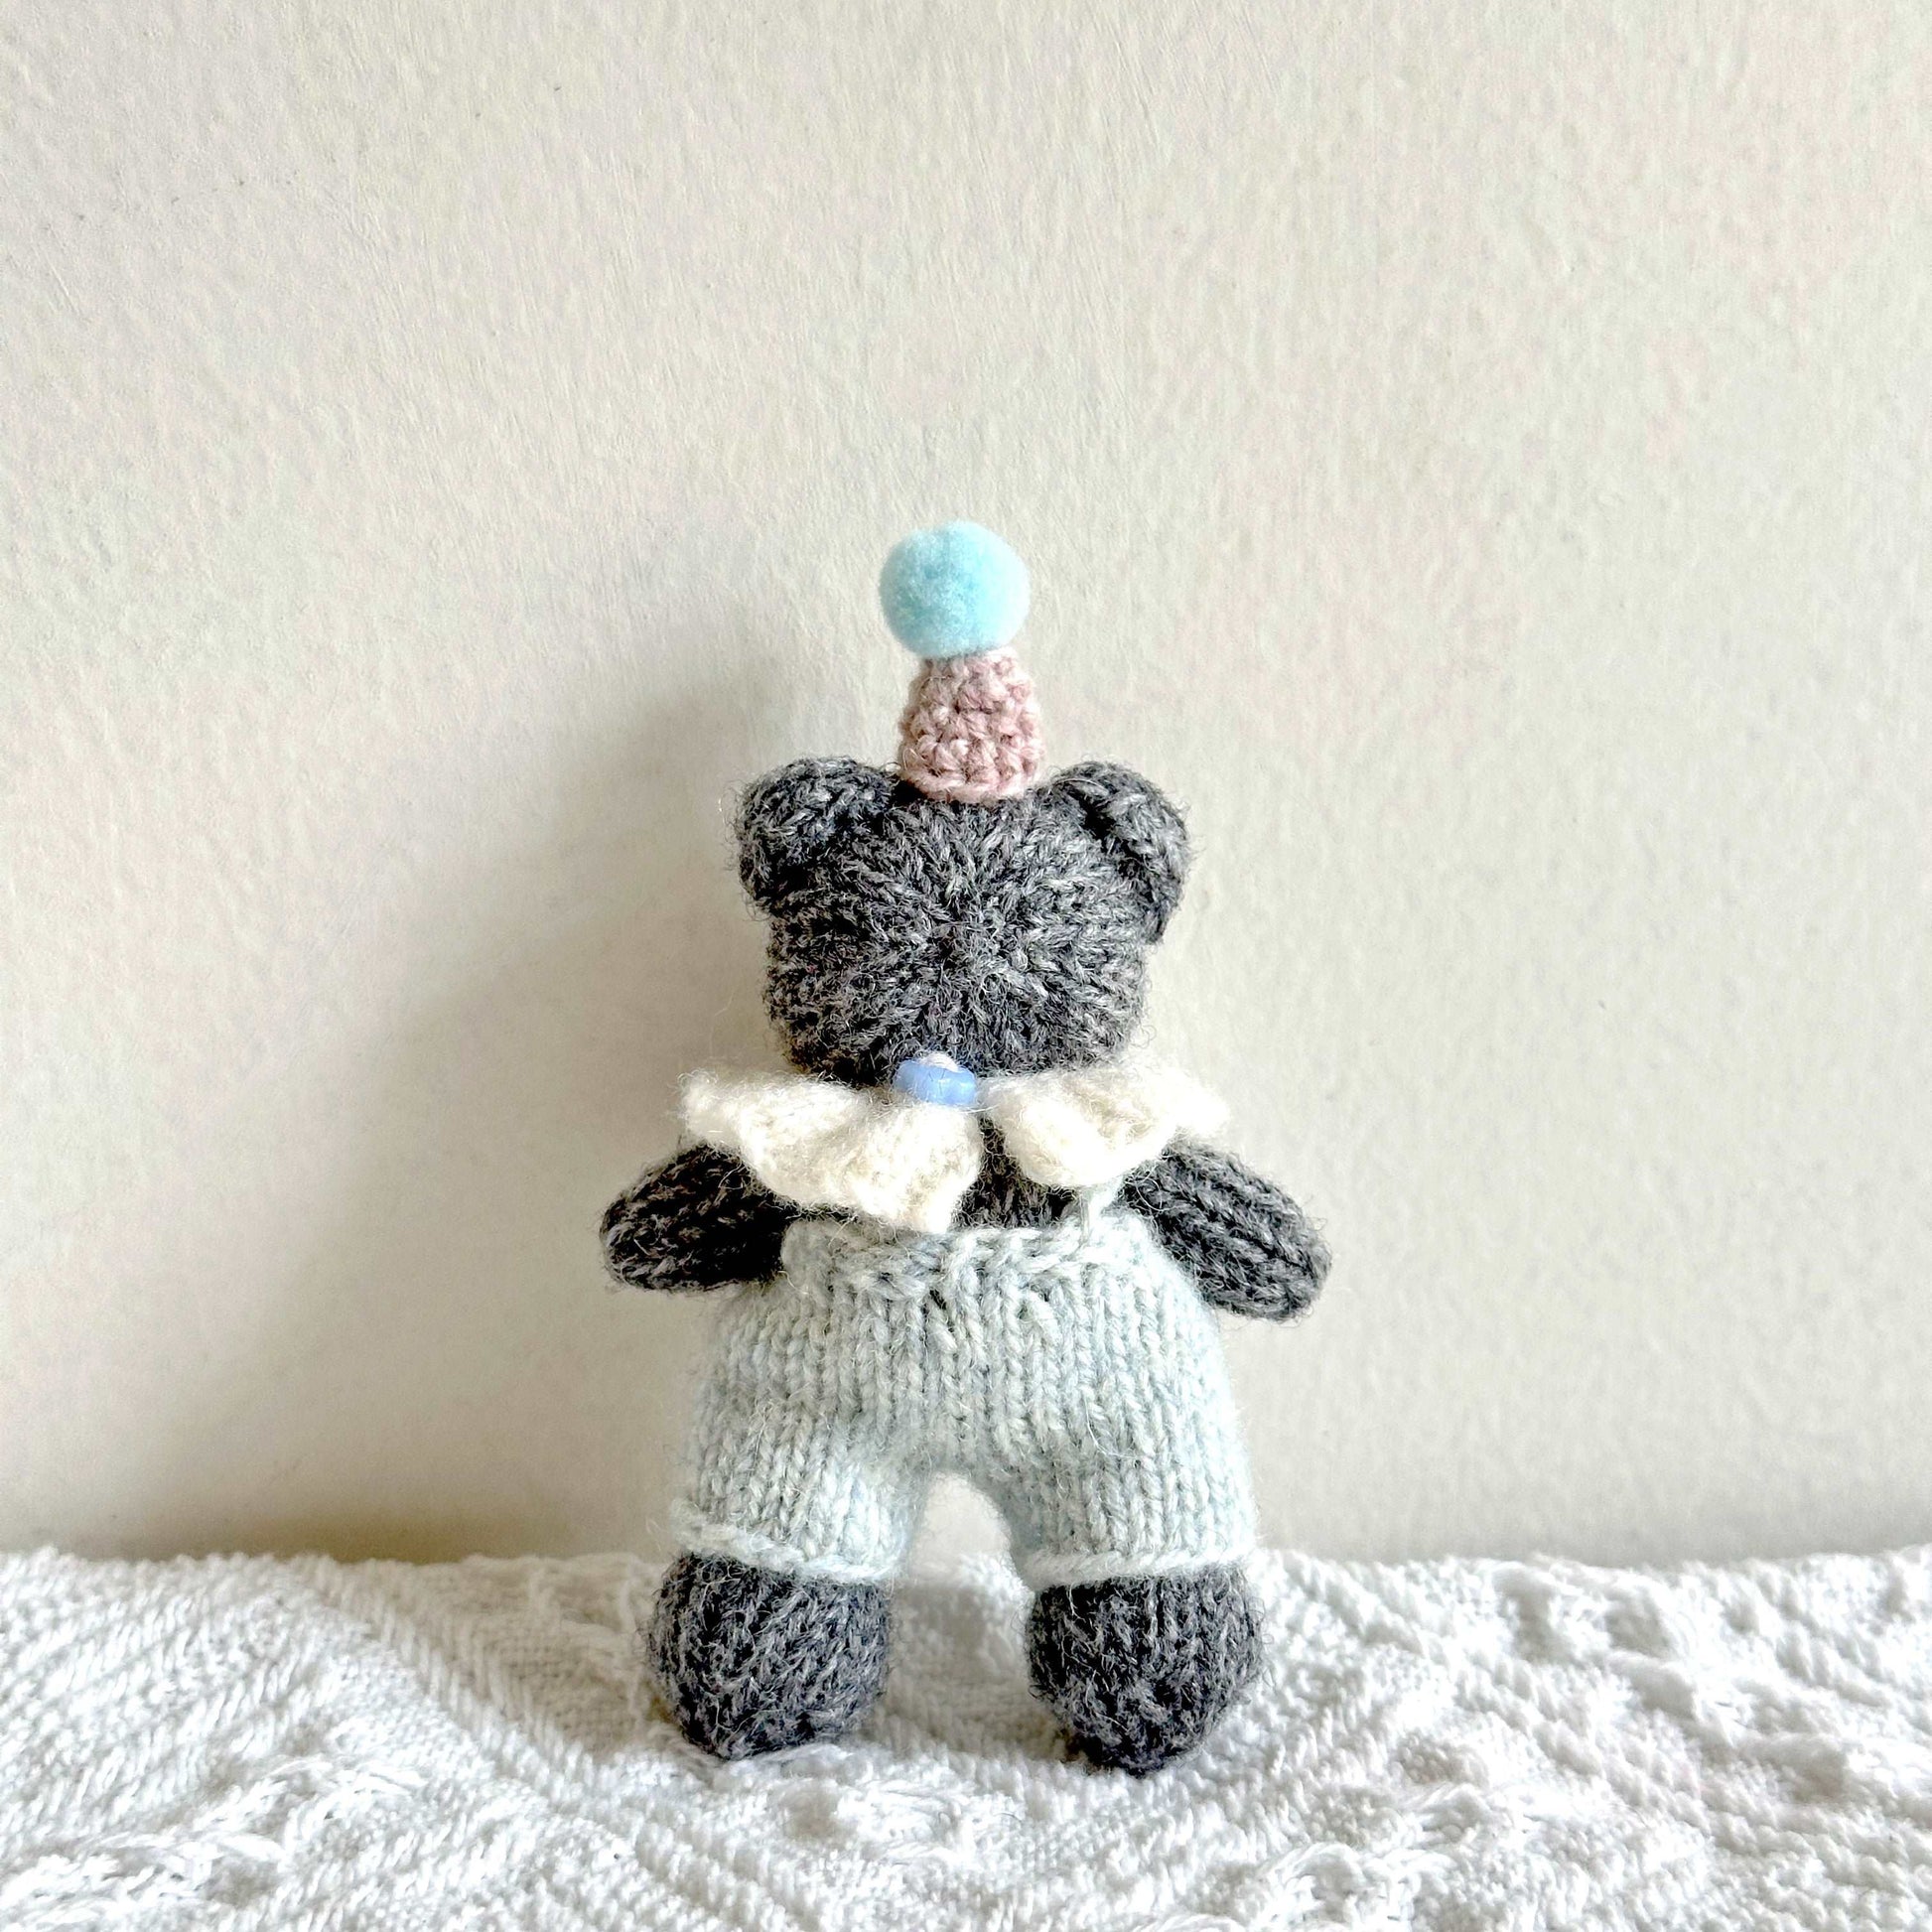 Artisanal Handmade Knitted Bear Figurine for Adorning Spaces